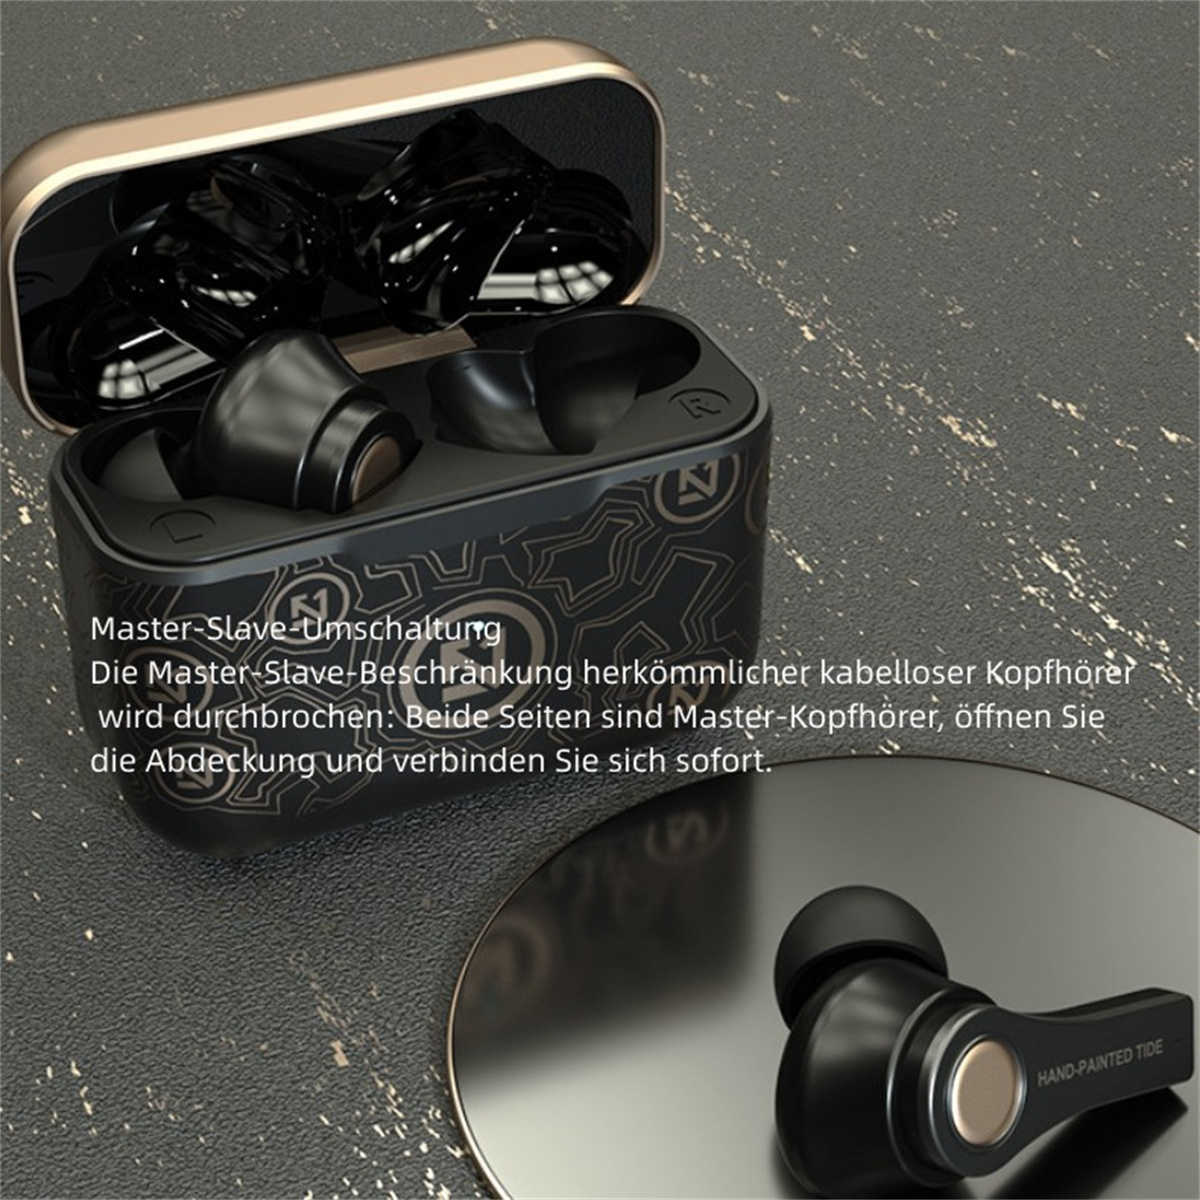 Geräuschunterdrückung, In-ear Wasserdichtes Bluetooth Bluetooth Schwarz mit Bluetooth Kabelloses schwarz In-Ear SYNTEK Headset Headset Kopfhörer